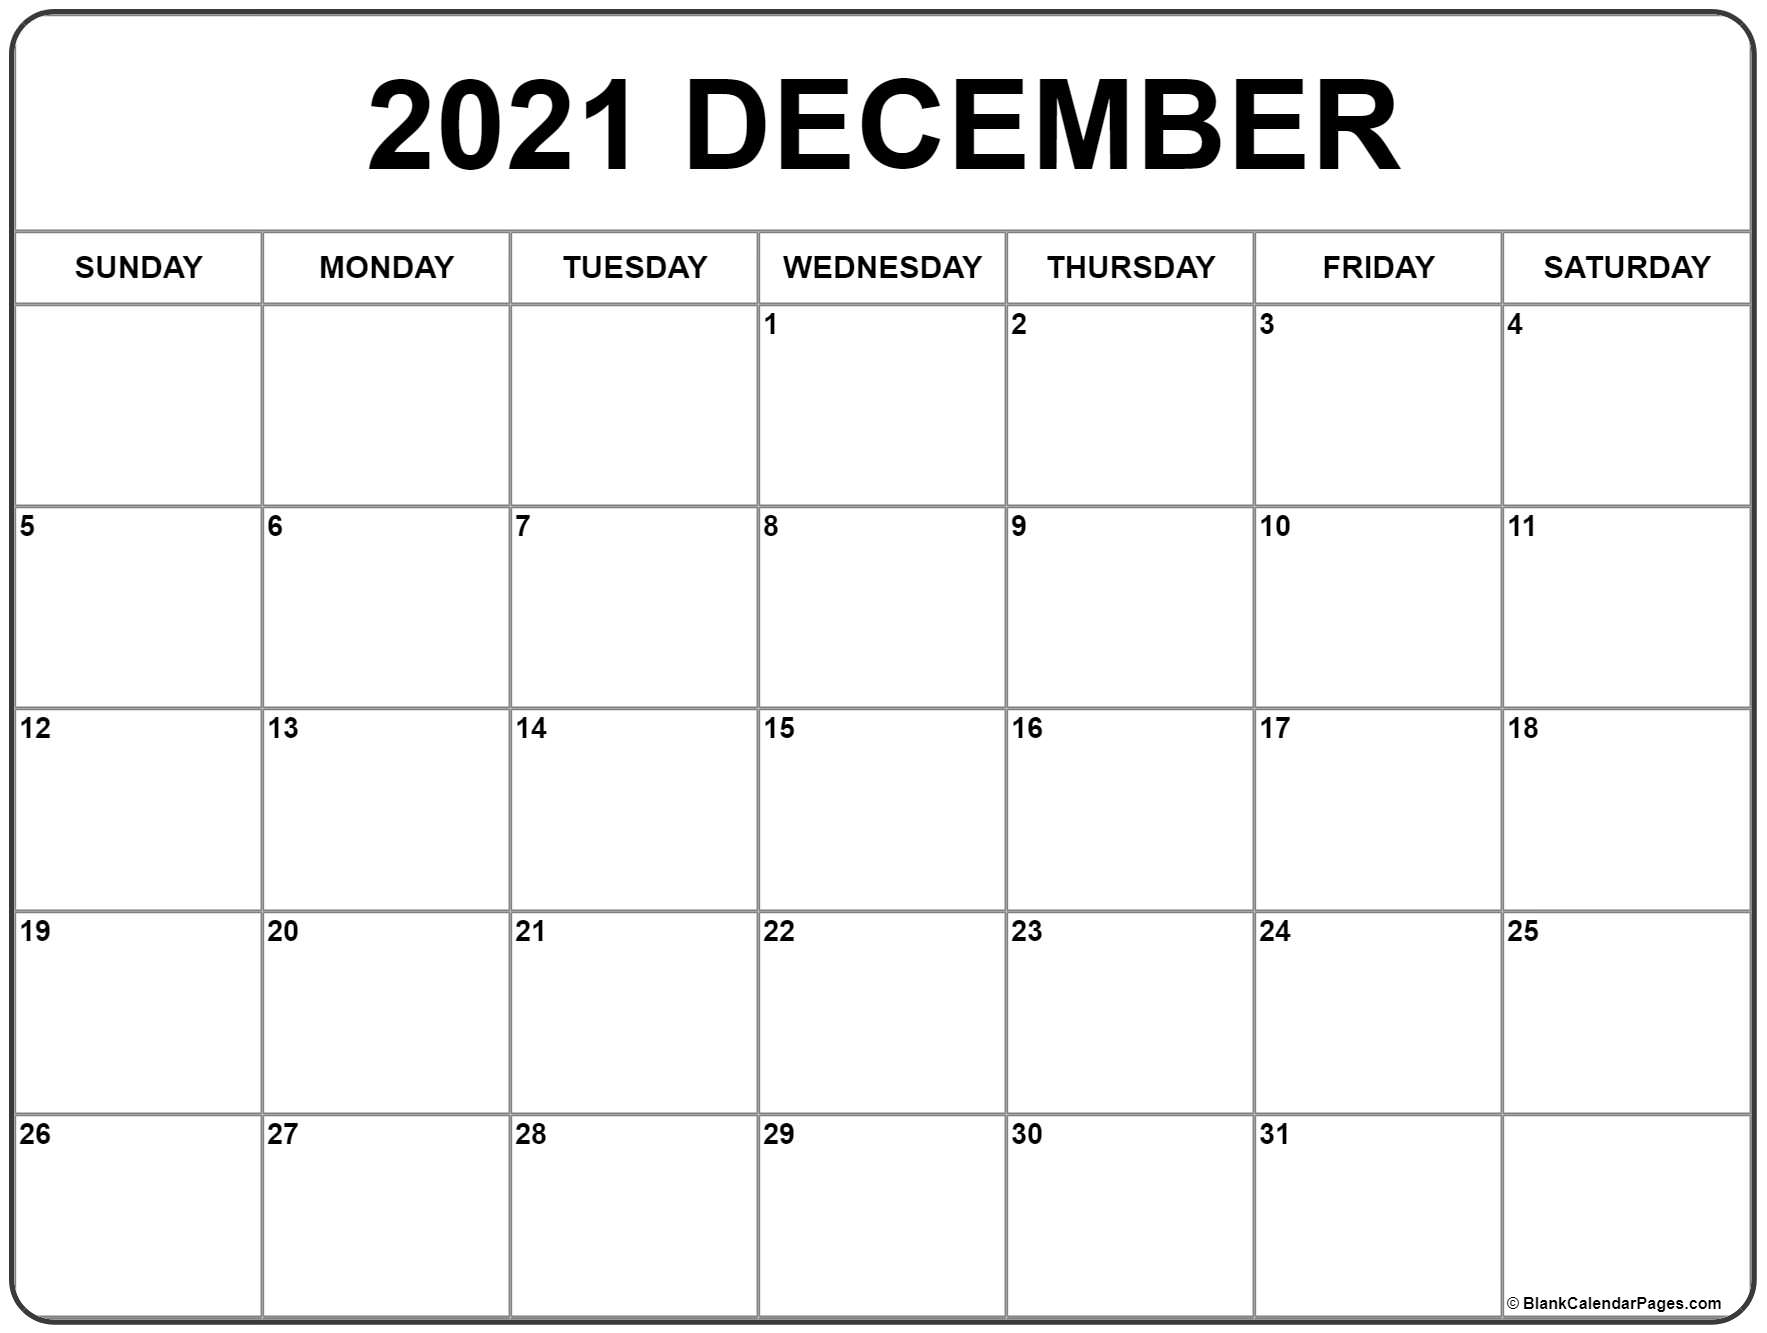 Catch August - December 2021 Calendar Printable